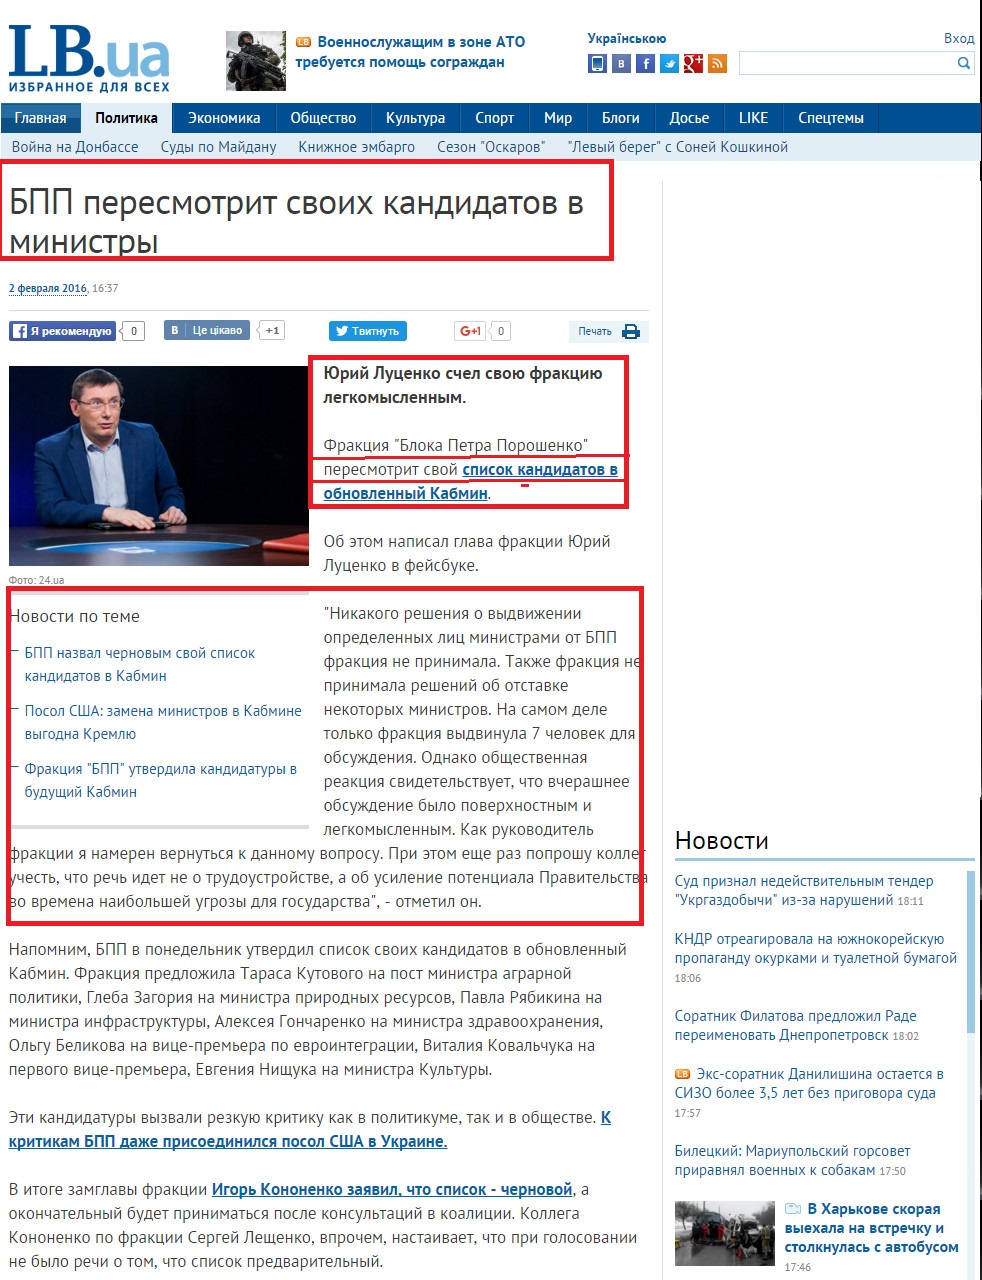 http://lb.ua/news/2016/02/02/326996_bpp_peresmotrit_kandidatov.html?utm_source=local&utm_medium=cpm&utm_campaign=news